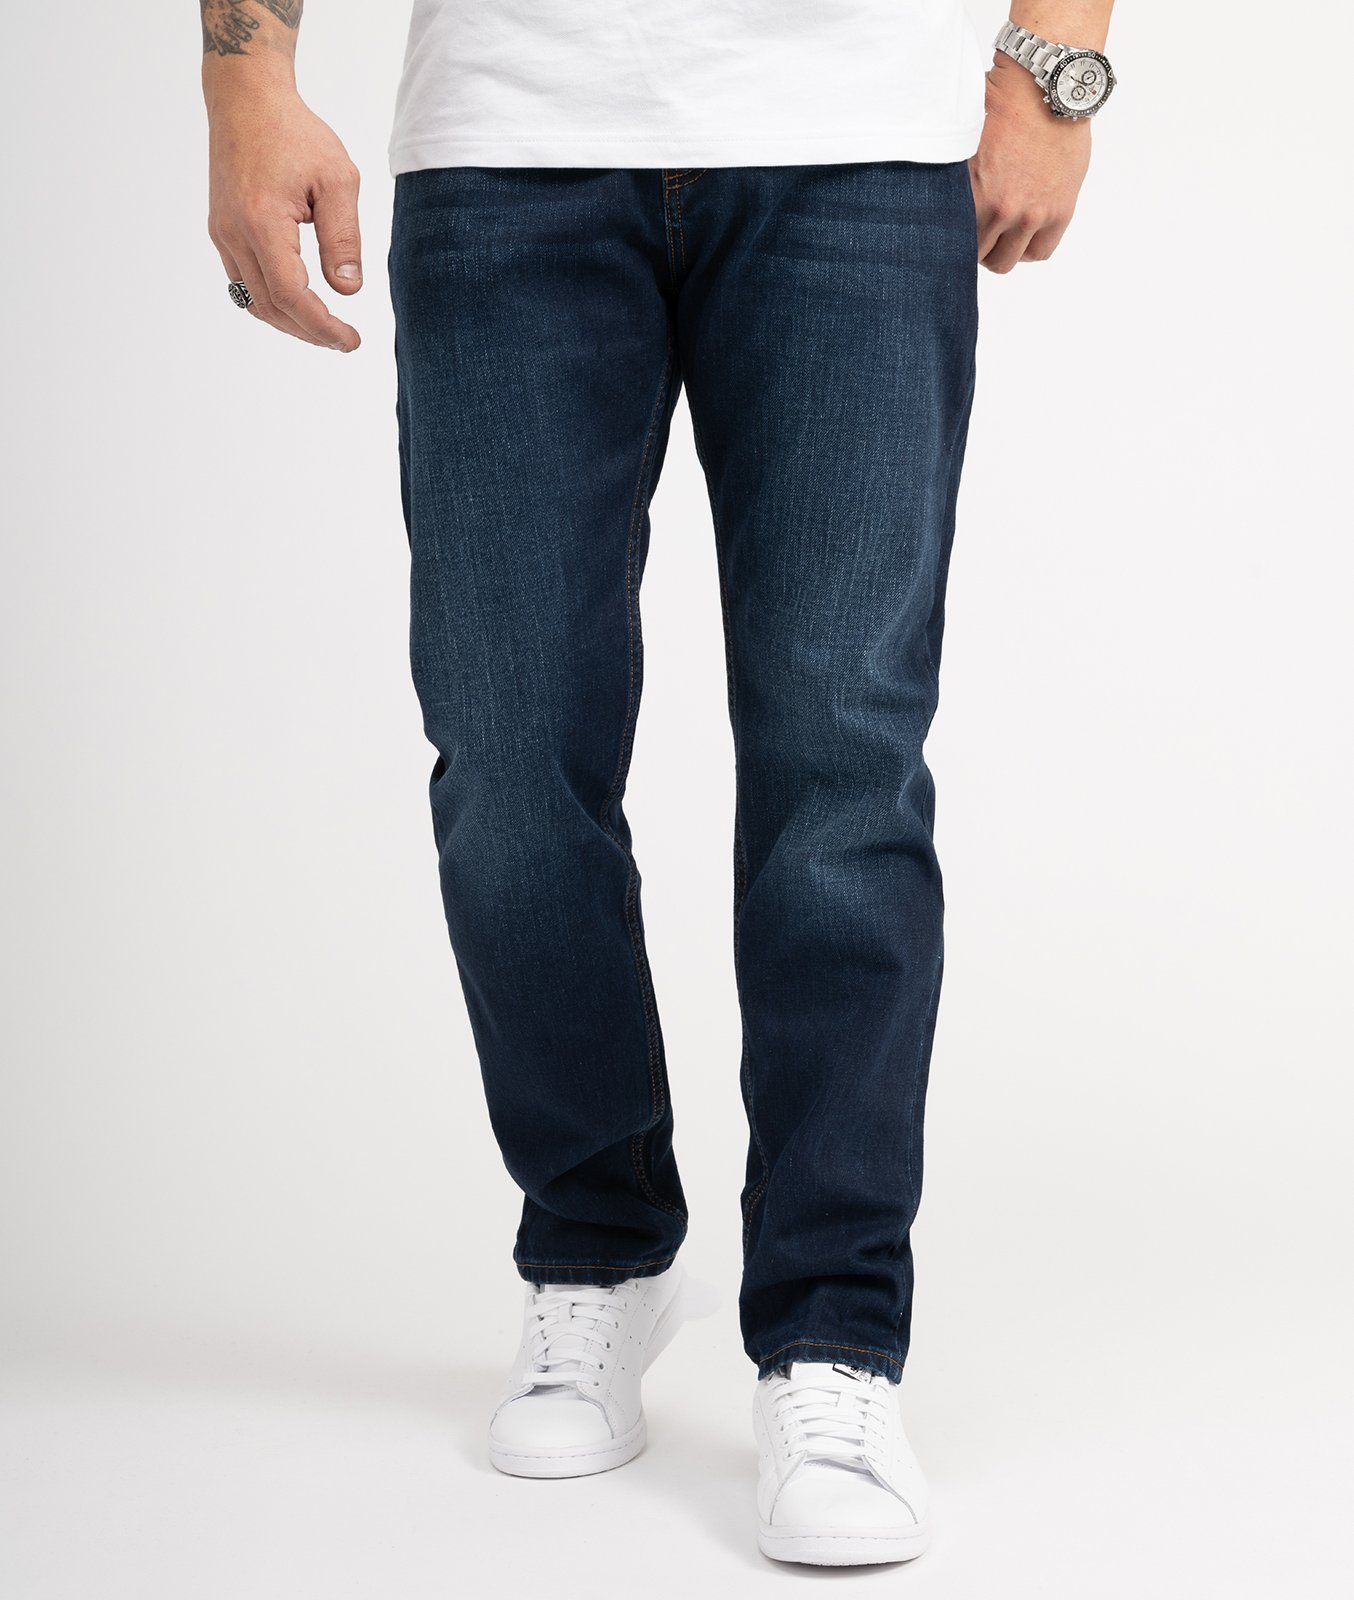 IC-700 Jeans Indumentum Comfort Herren Straight-Jeans Fit